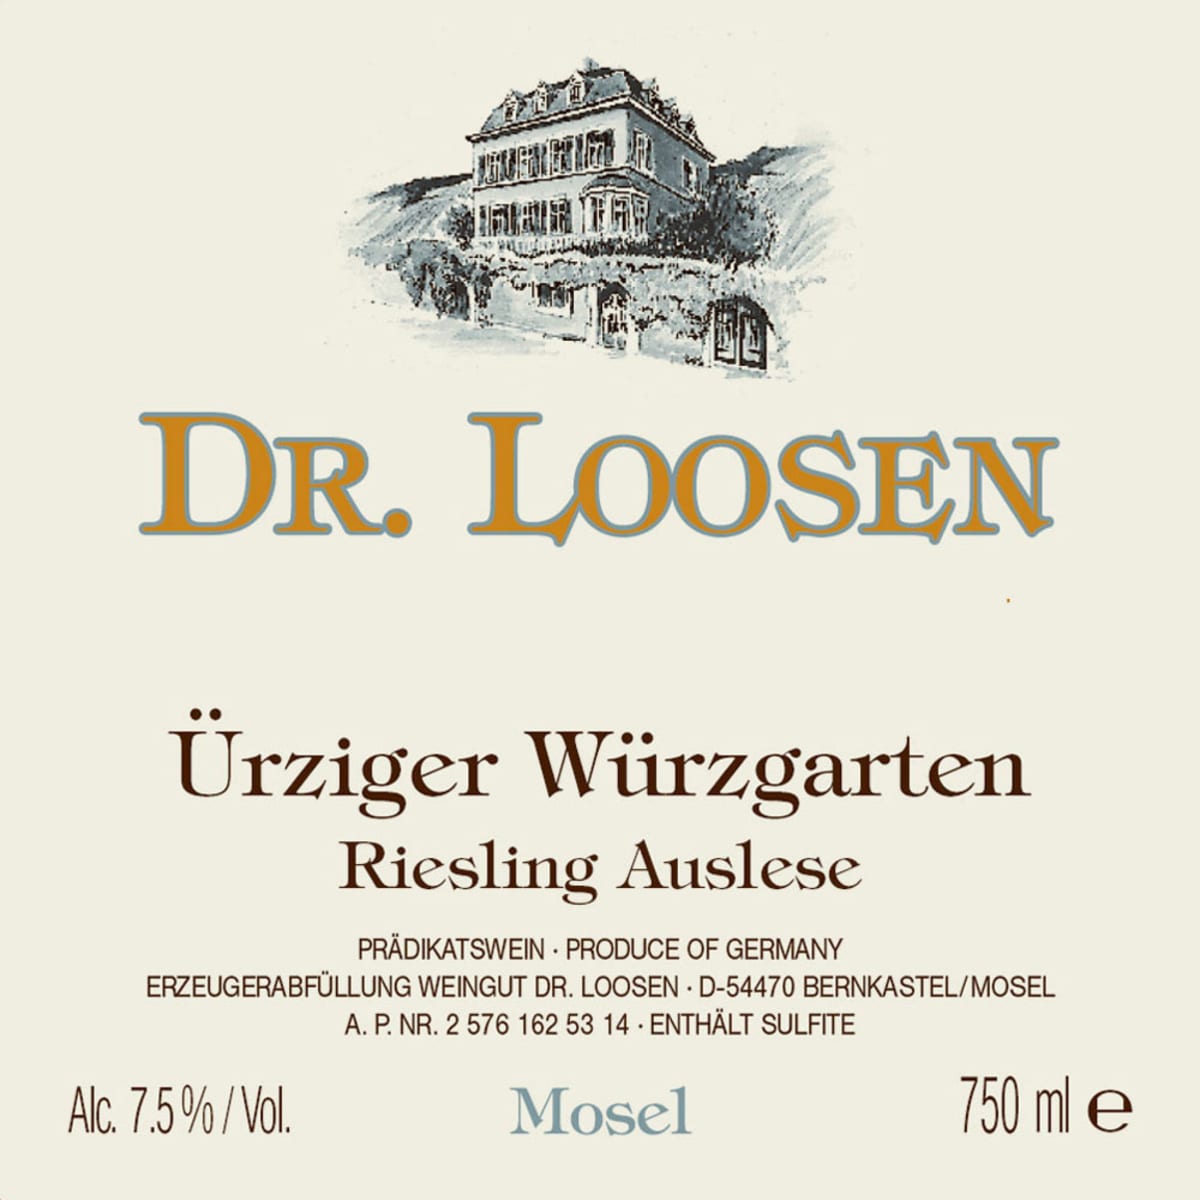 Dr. Loosen Urziger Wurzgarten Riesling Auslese 2015 Front Label